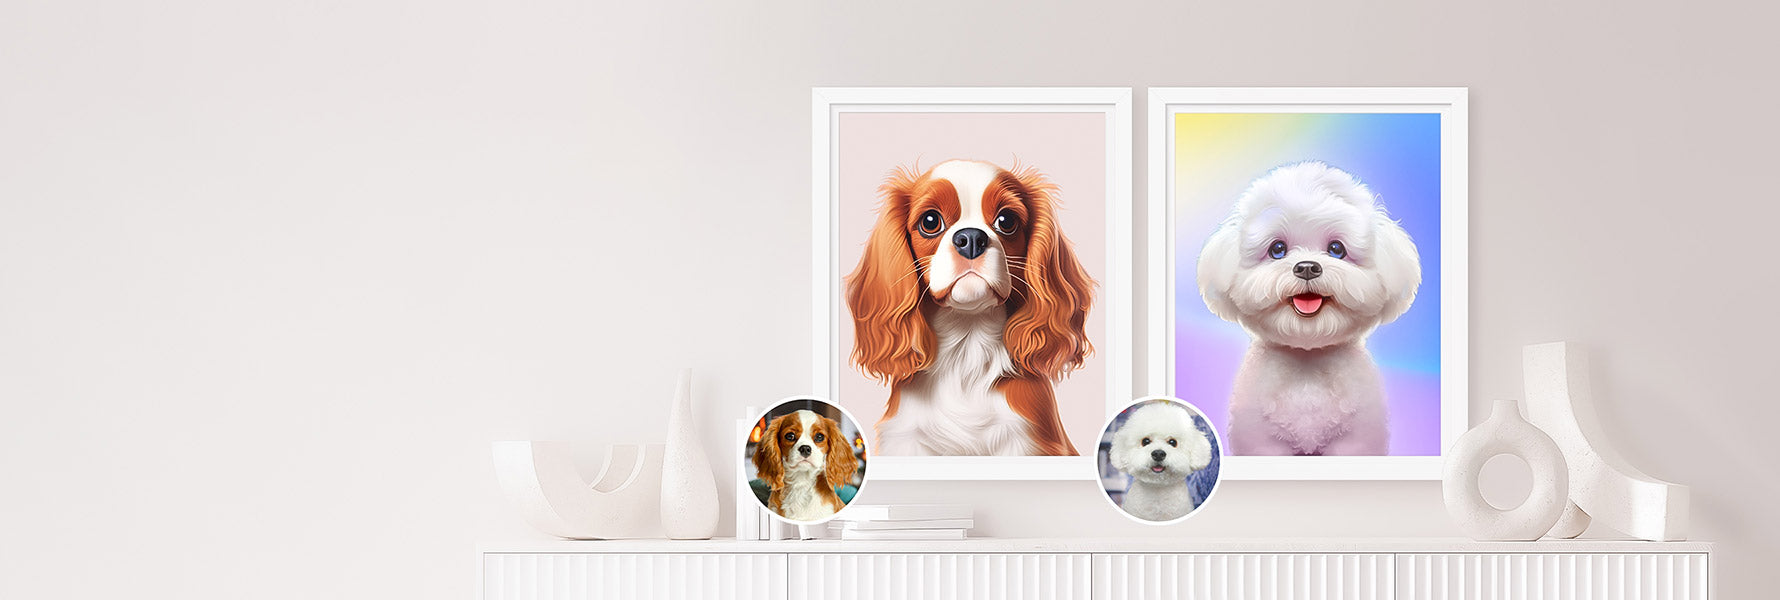 Cartoon style framed custom pet portraits cocker spaniel and poodle